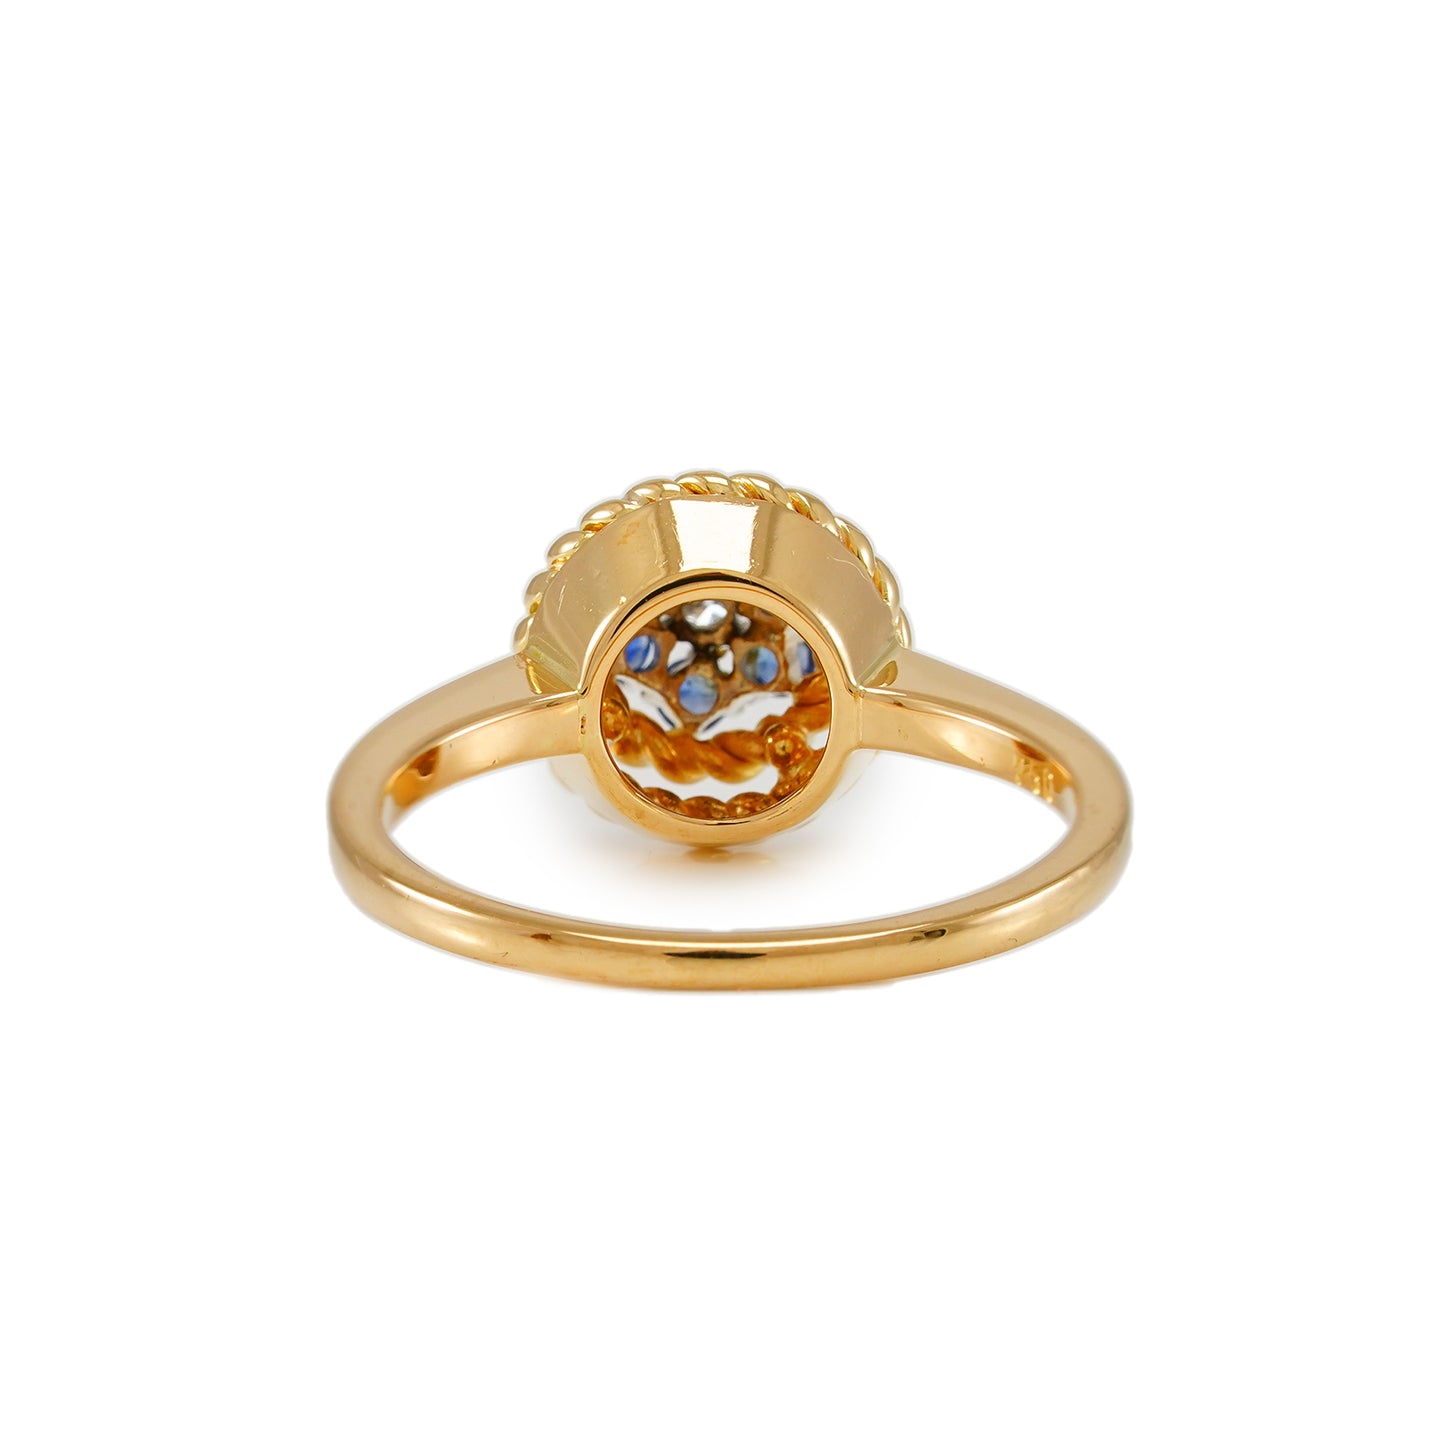 Vintage Gemstone Ring Spinel Diamond Yellow Gold 18K Women's Jewelry Gold Ring